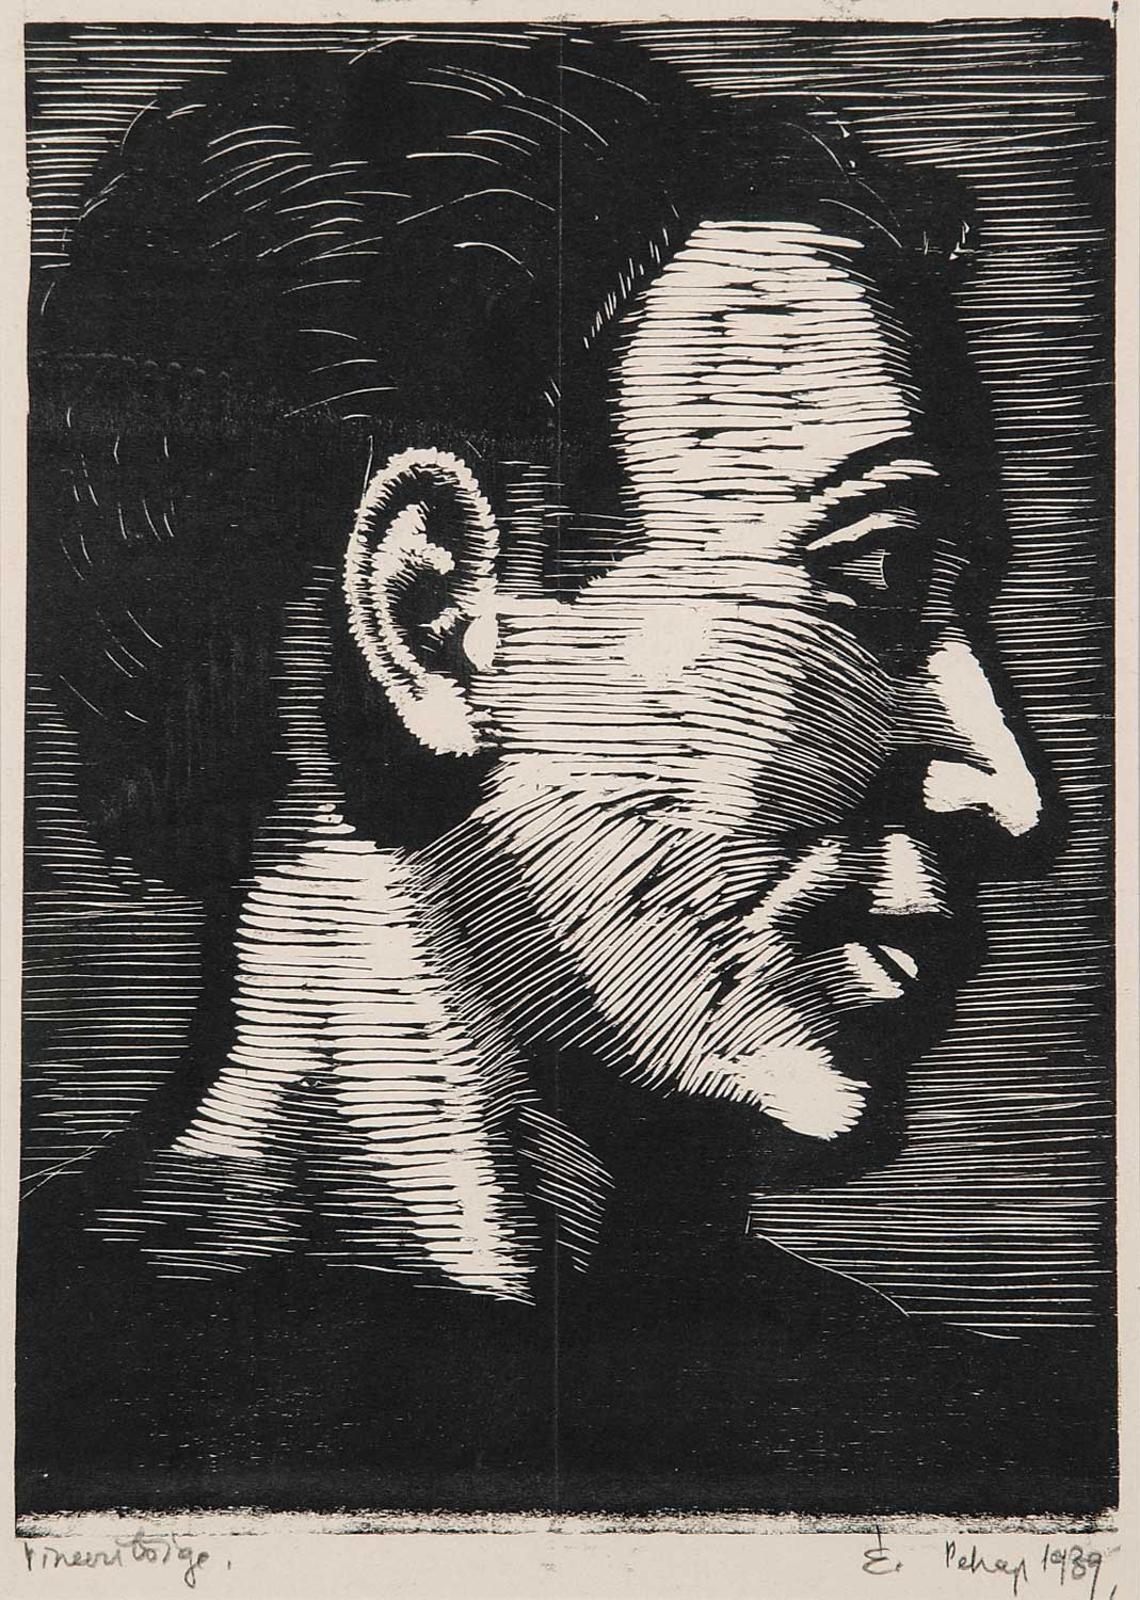 Eric Konstantin Pehap (1912-1971) - Untitled - Side Profile